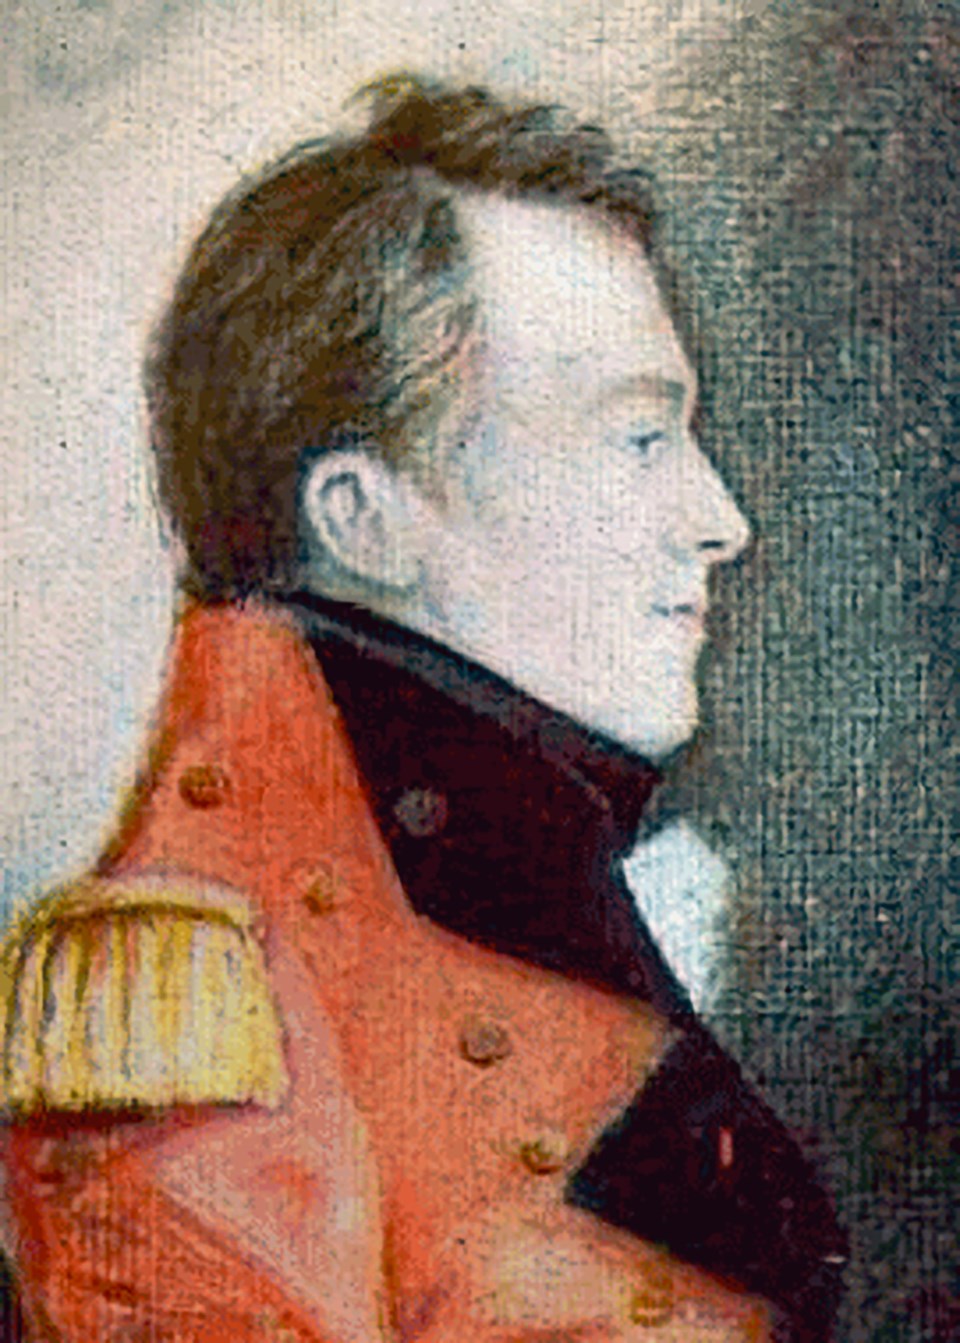 General Isaac Brock